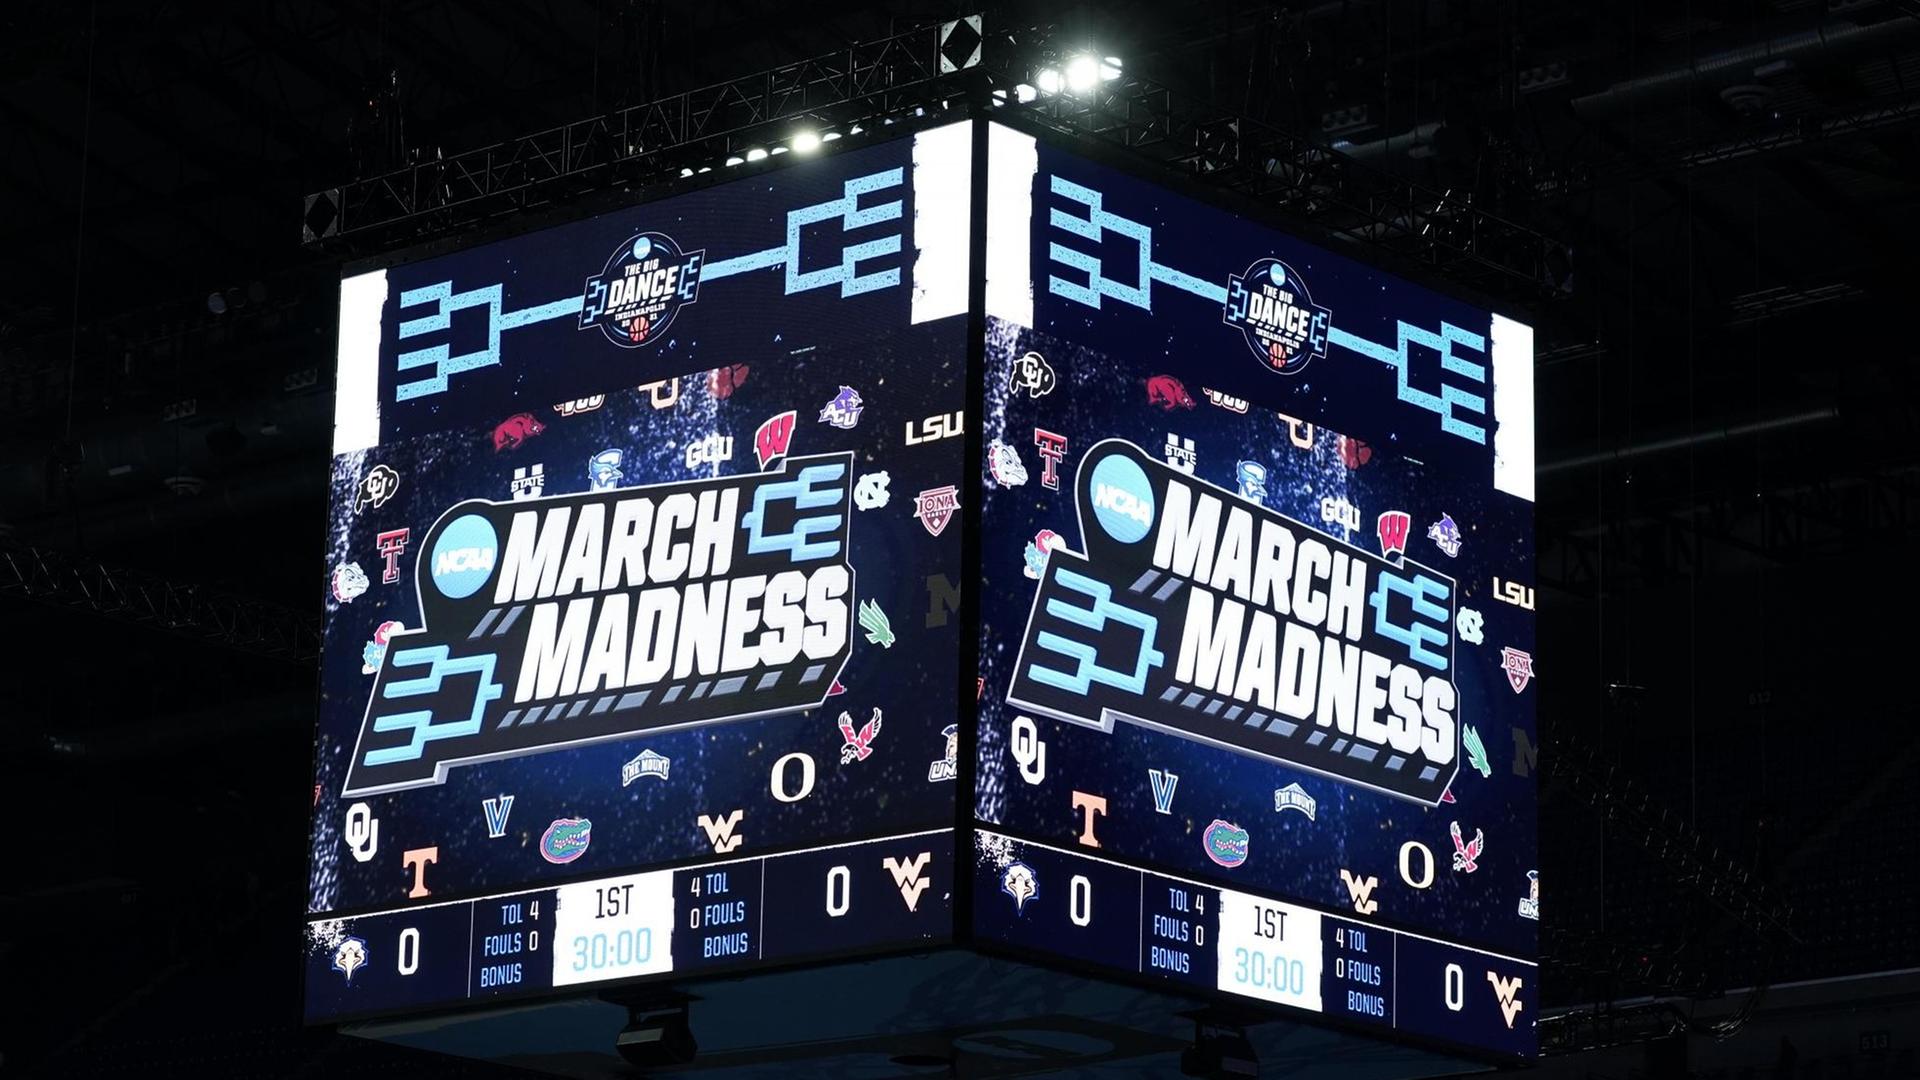 Der Videowürfel bei den NCAA March Madness in Indianapolis.